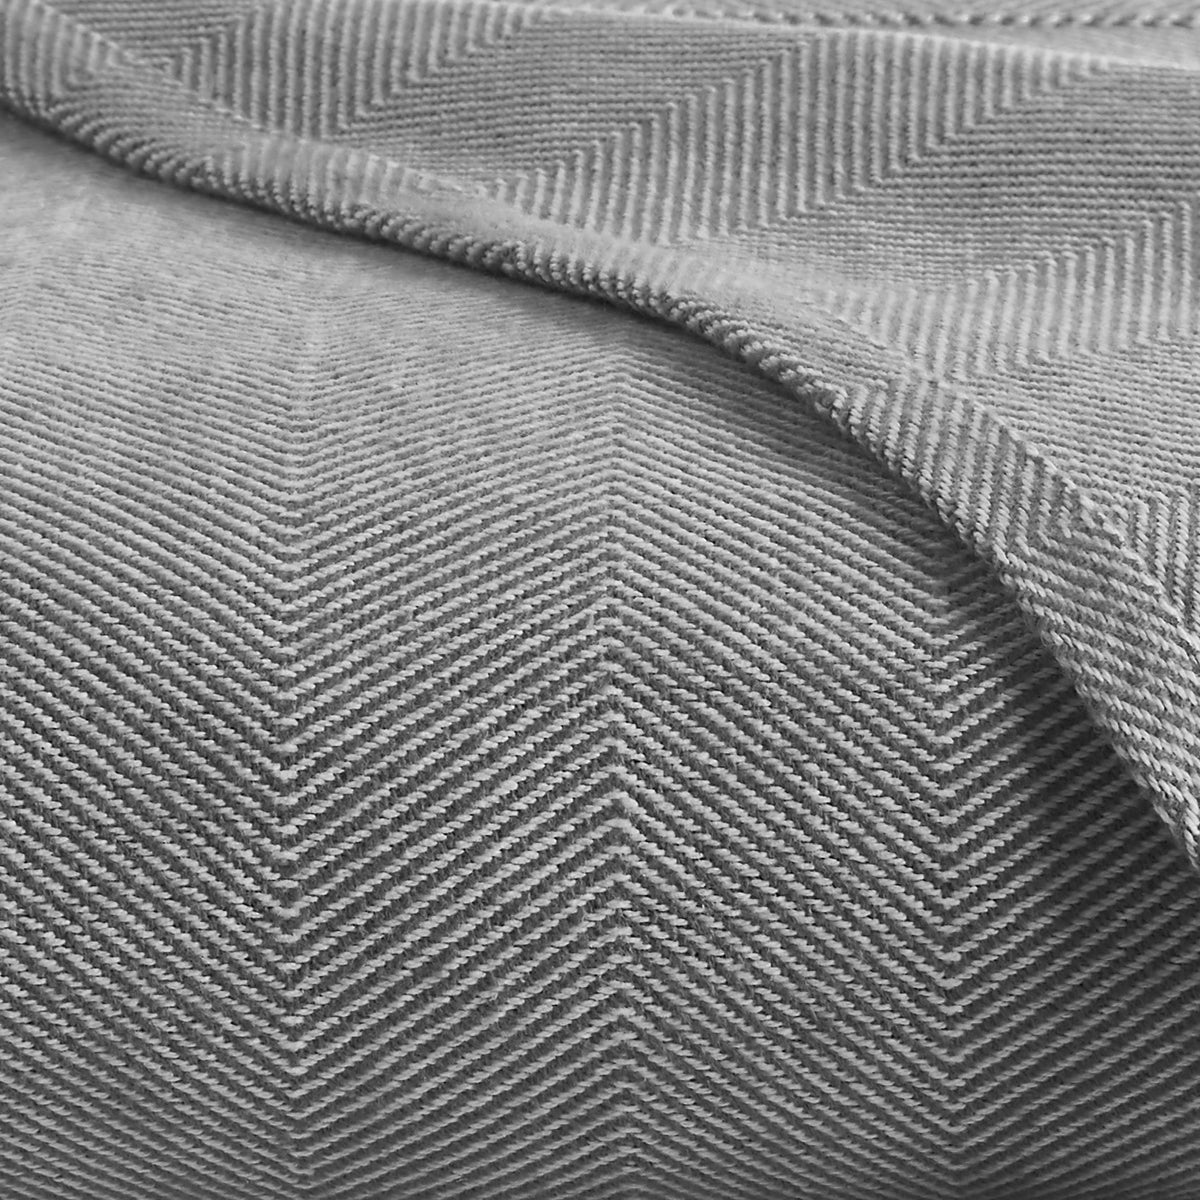 Downtown Company Herringbone Blankets and Throw - Charcoal Gray/White